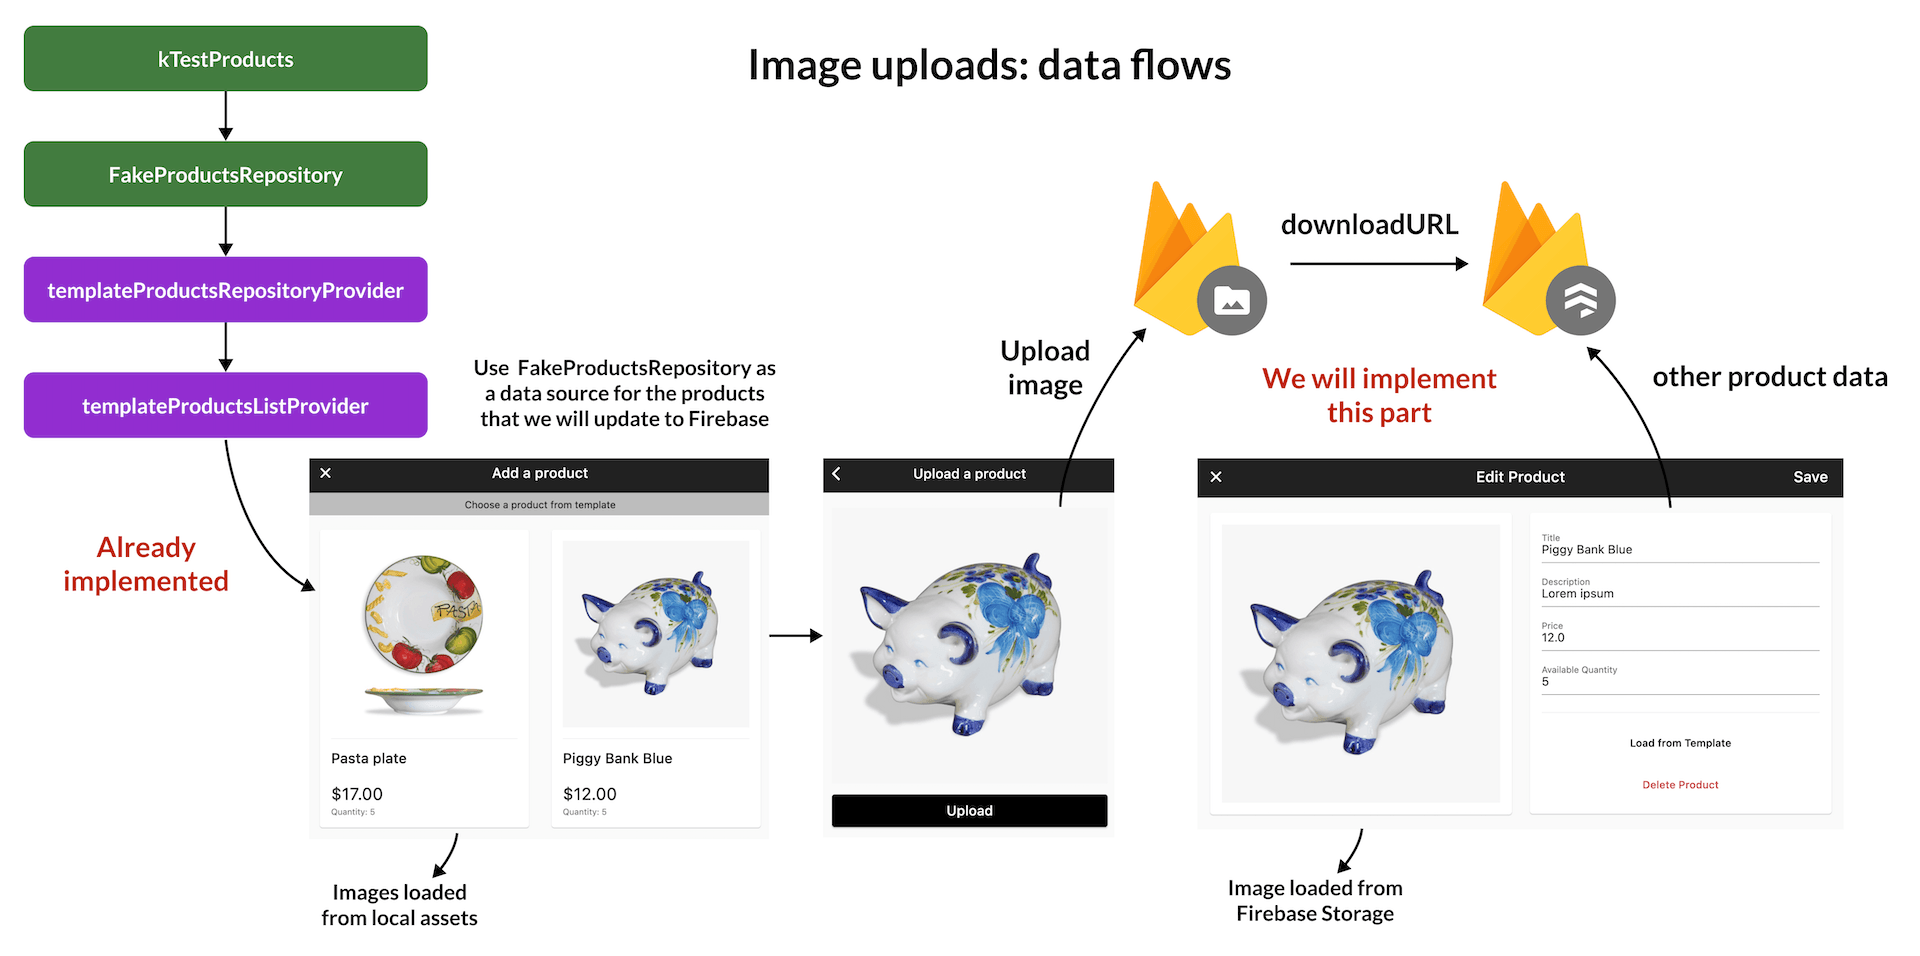 Image upload flows with Firebase Storage